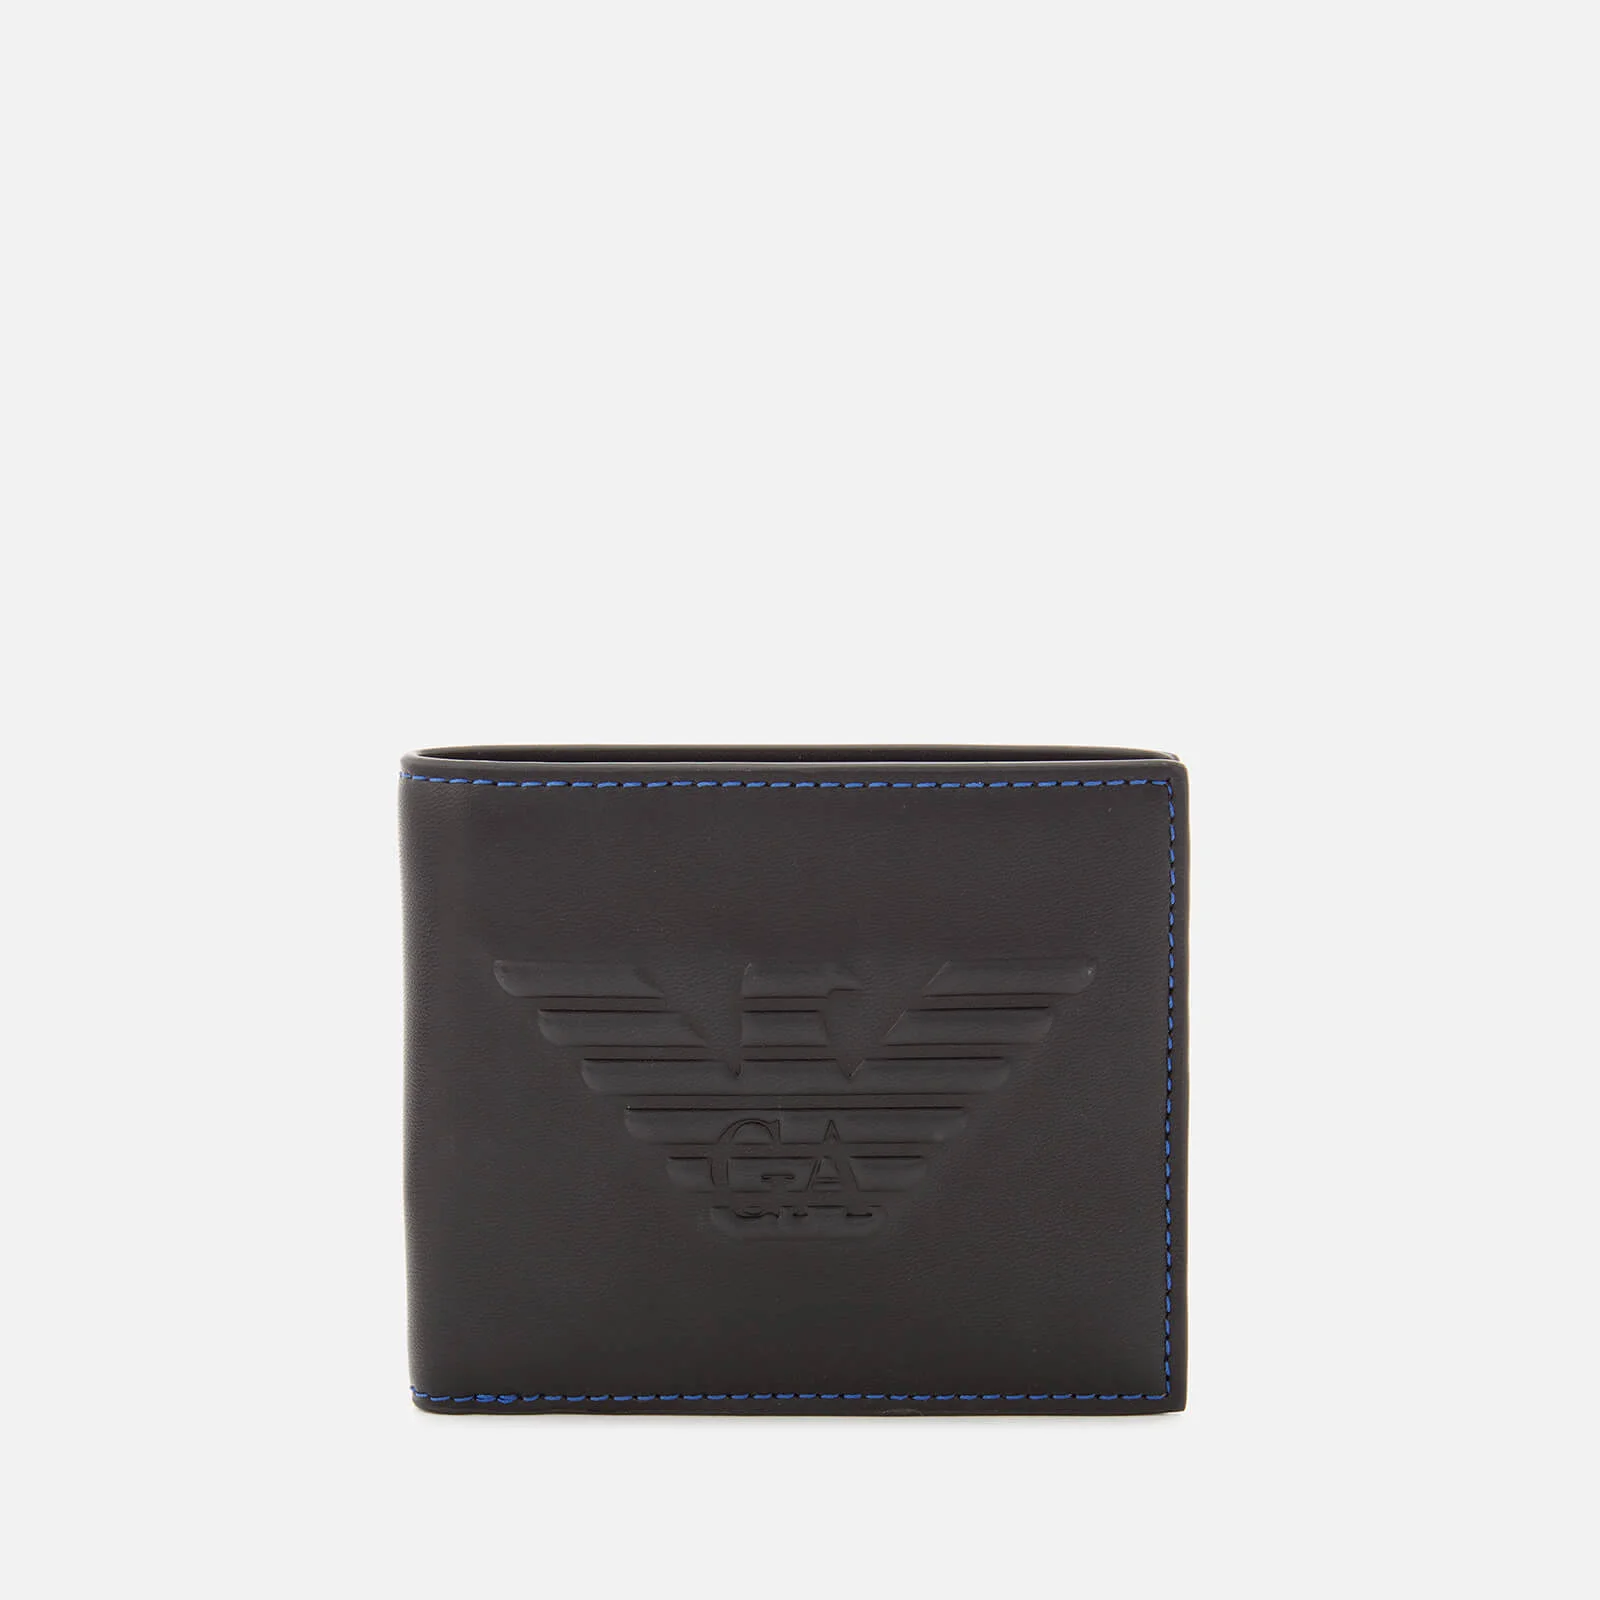 Emporio Armani Men's Small Bi-Fold Wallet - Black Image 1